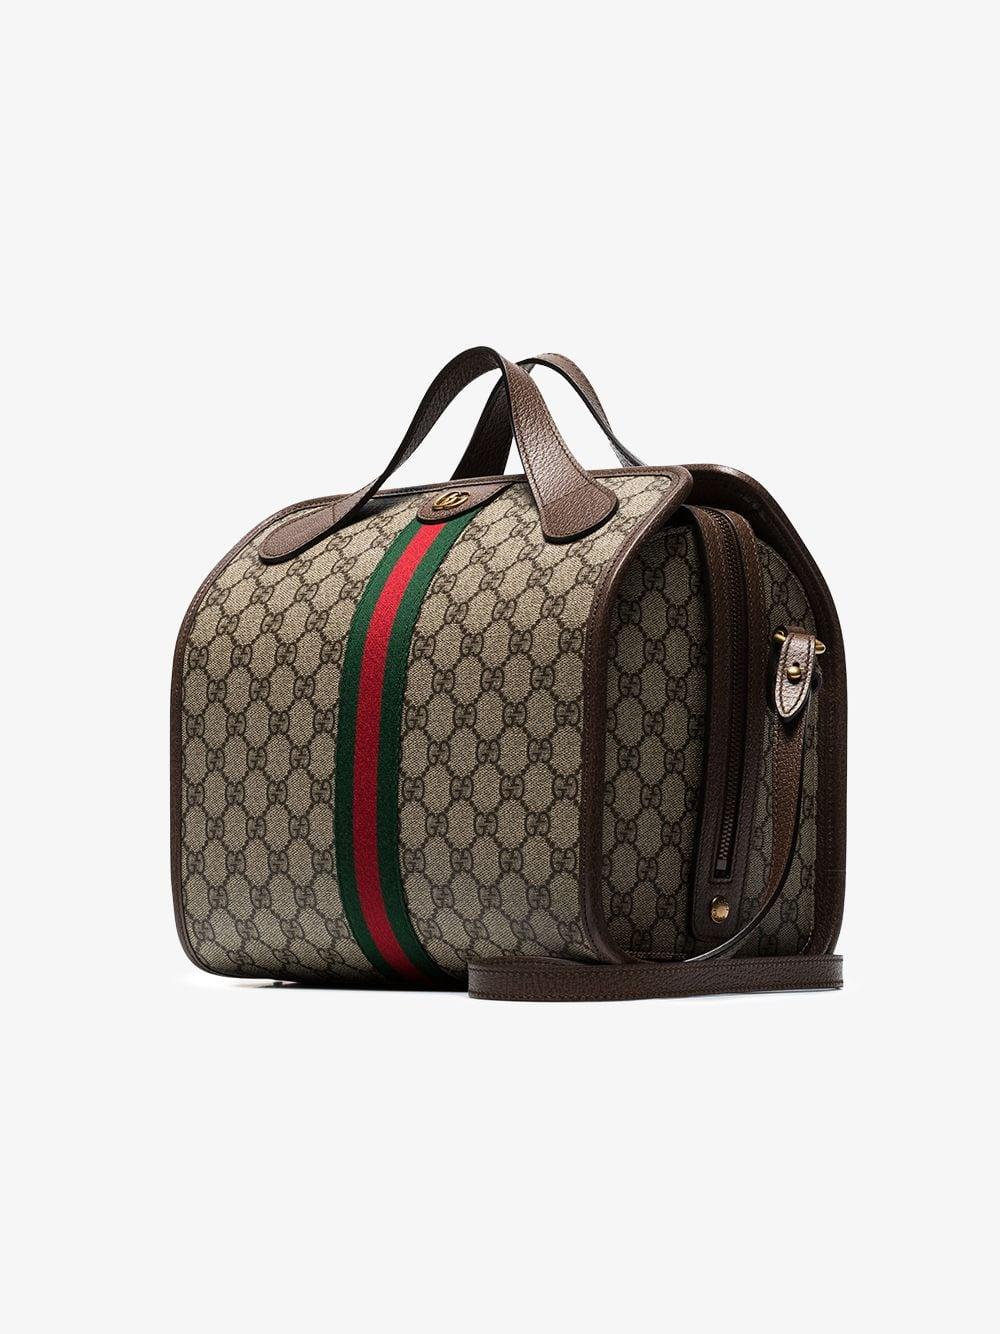 Gucci Beige And Brown Supreme Ophidia Mini Duffle Bag Tote - Lyst